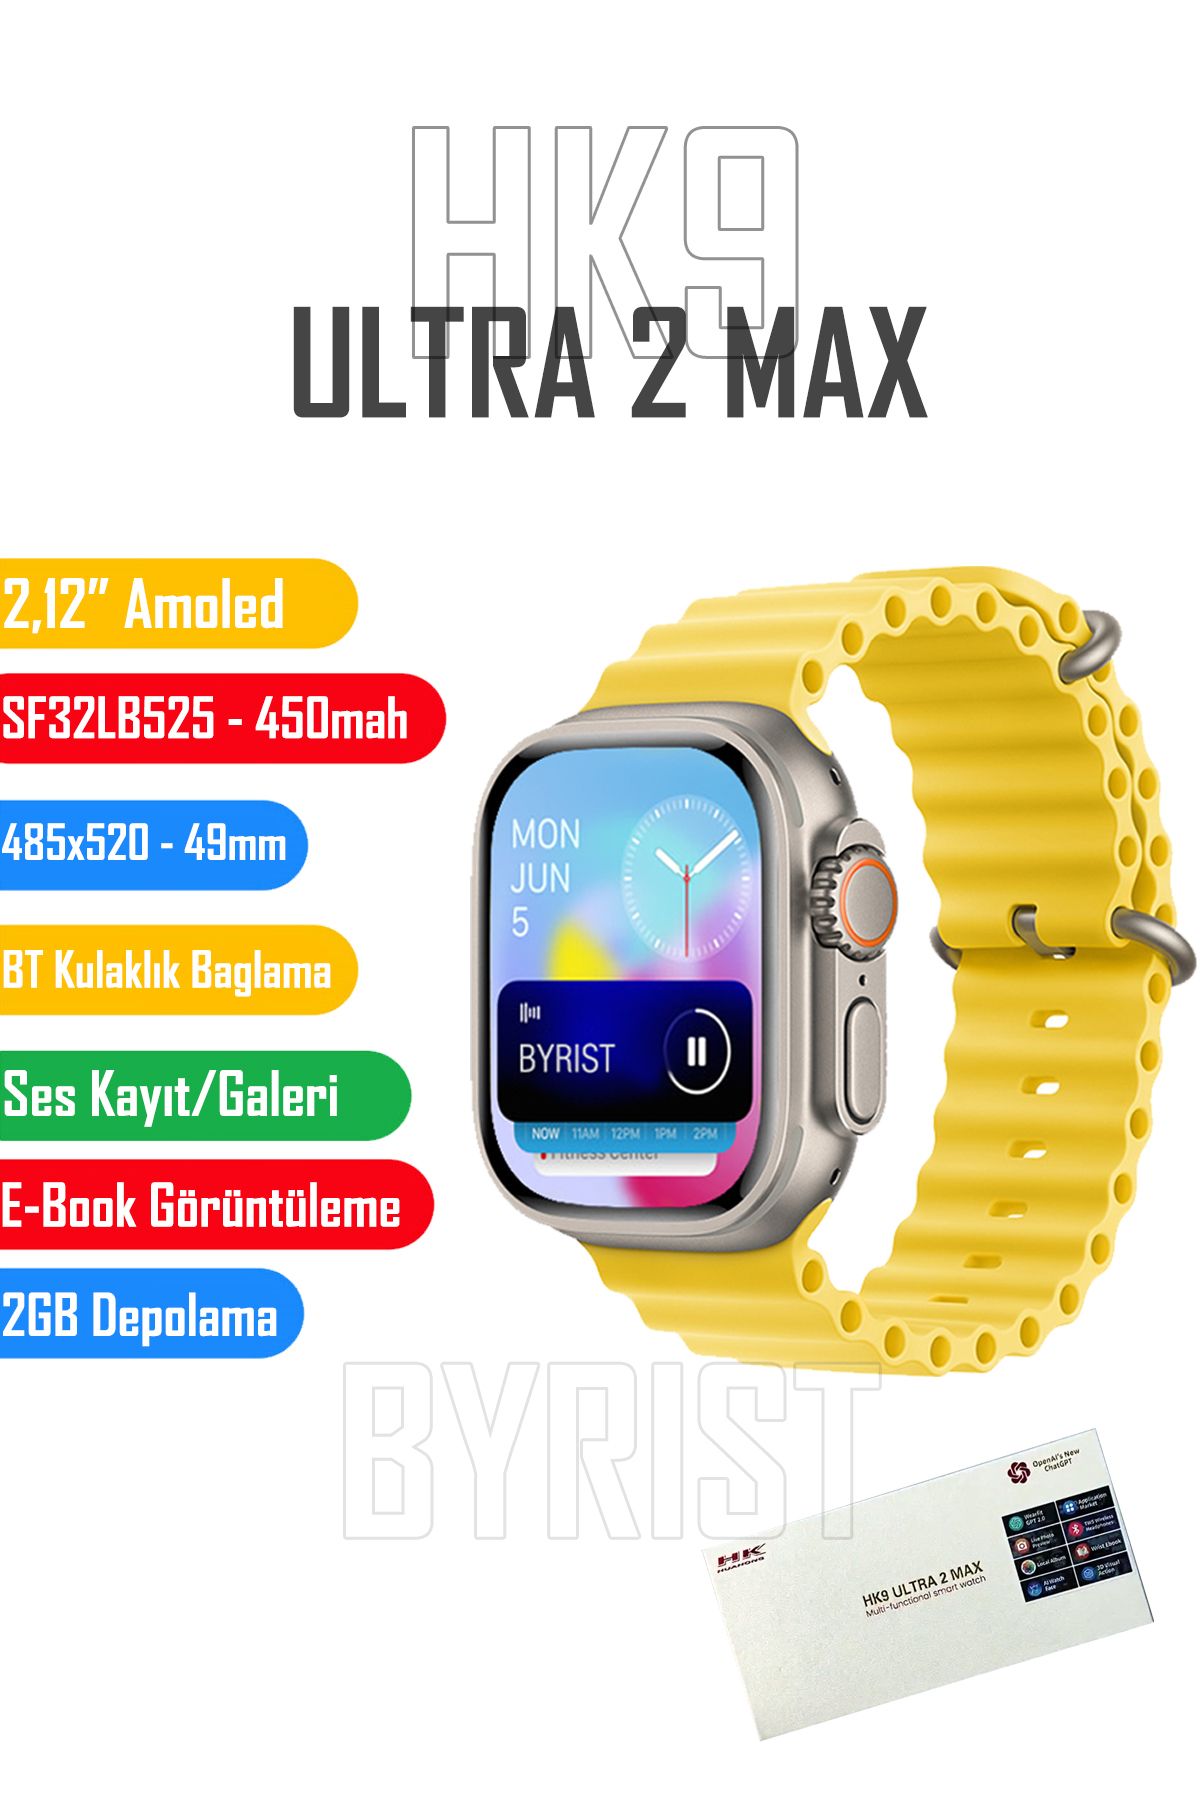 Byrist Hk9 Ultra 2 Max GEN4 49MM Amoled Ekran Galeri/Ses Kayıt/2GB Depolama Özellikli 2024 Akıllı Saat